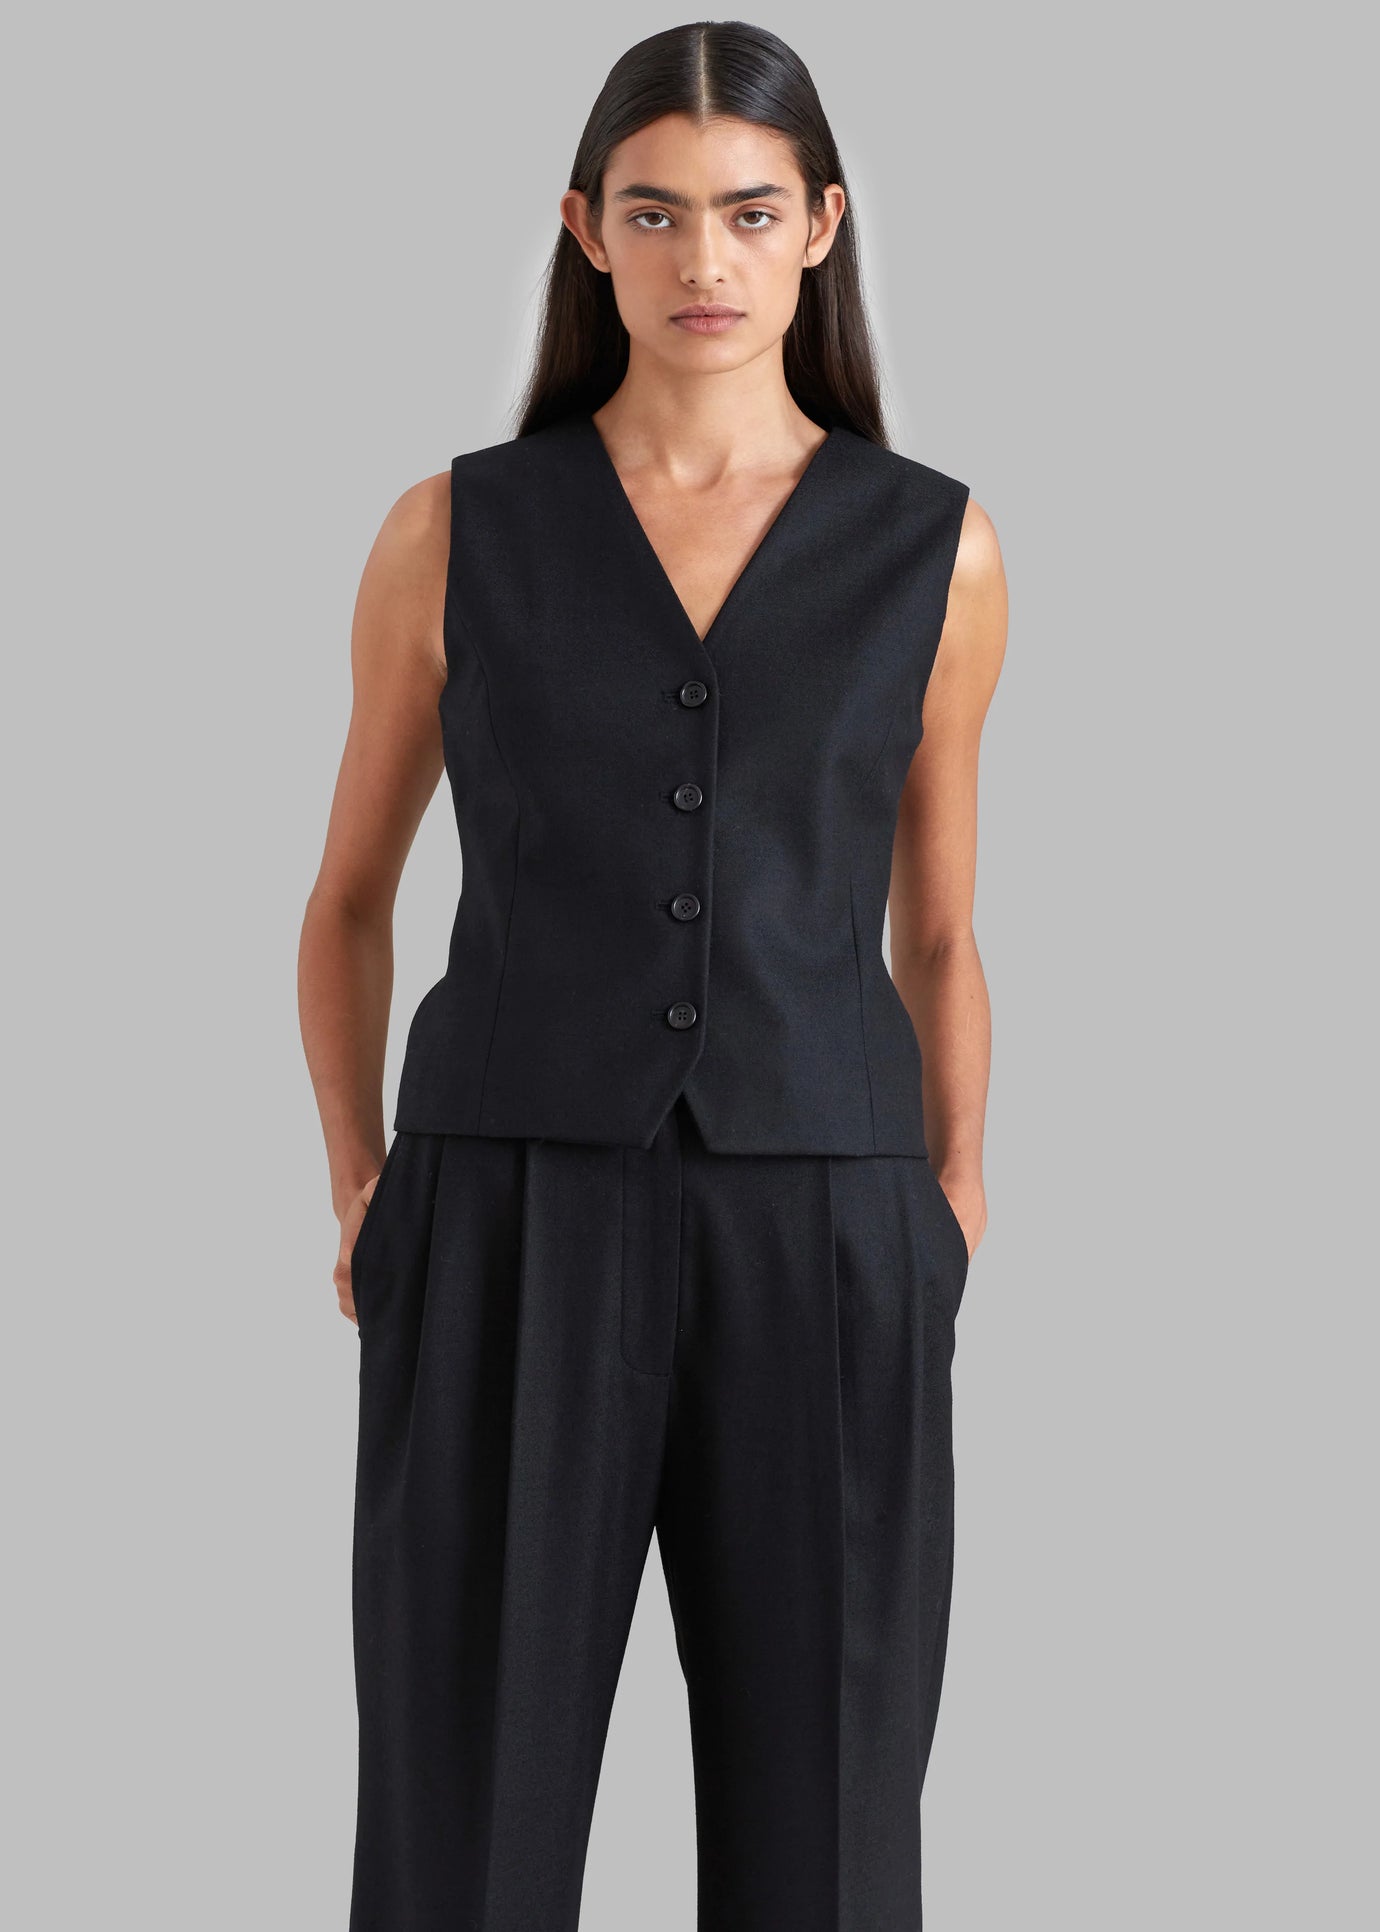 Eleanor Wool Vest - Black - 1